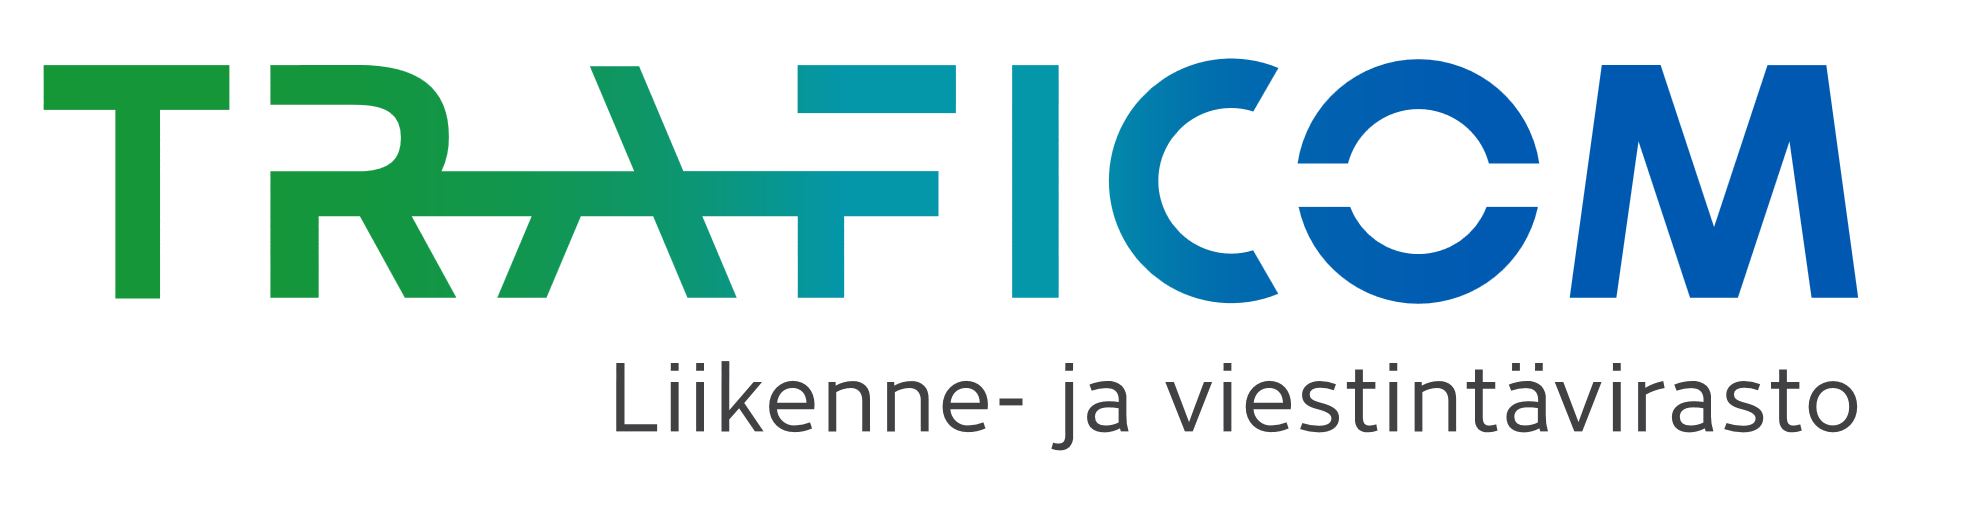 Logo of organization The Finnish Transport and Communications Agency Traficom